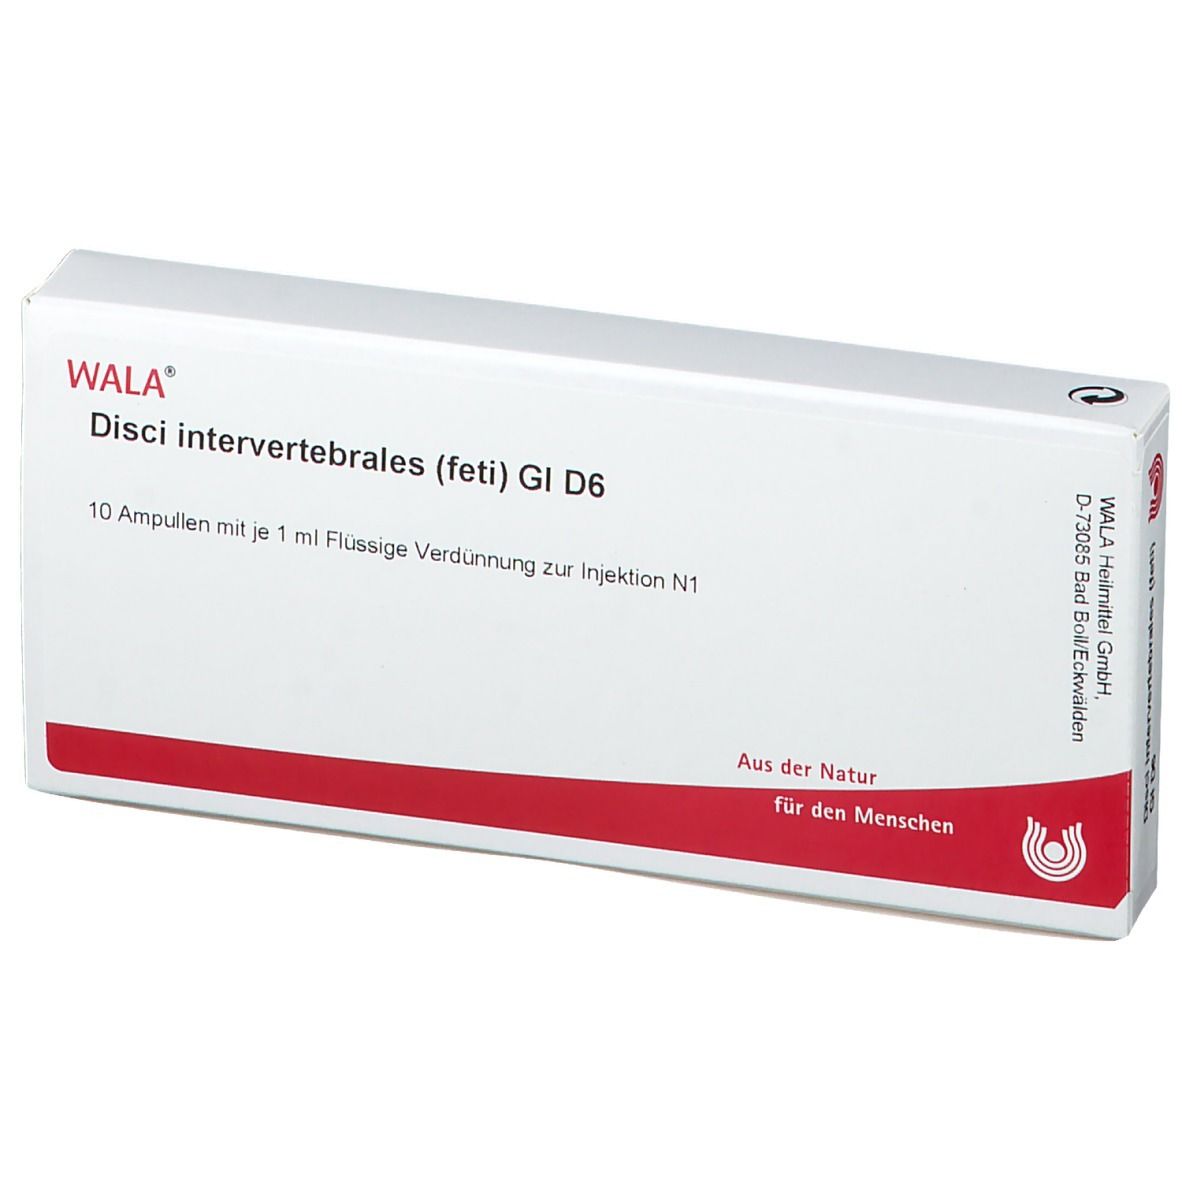 WALA® Disci intervertebrales feti Gl D 6